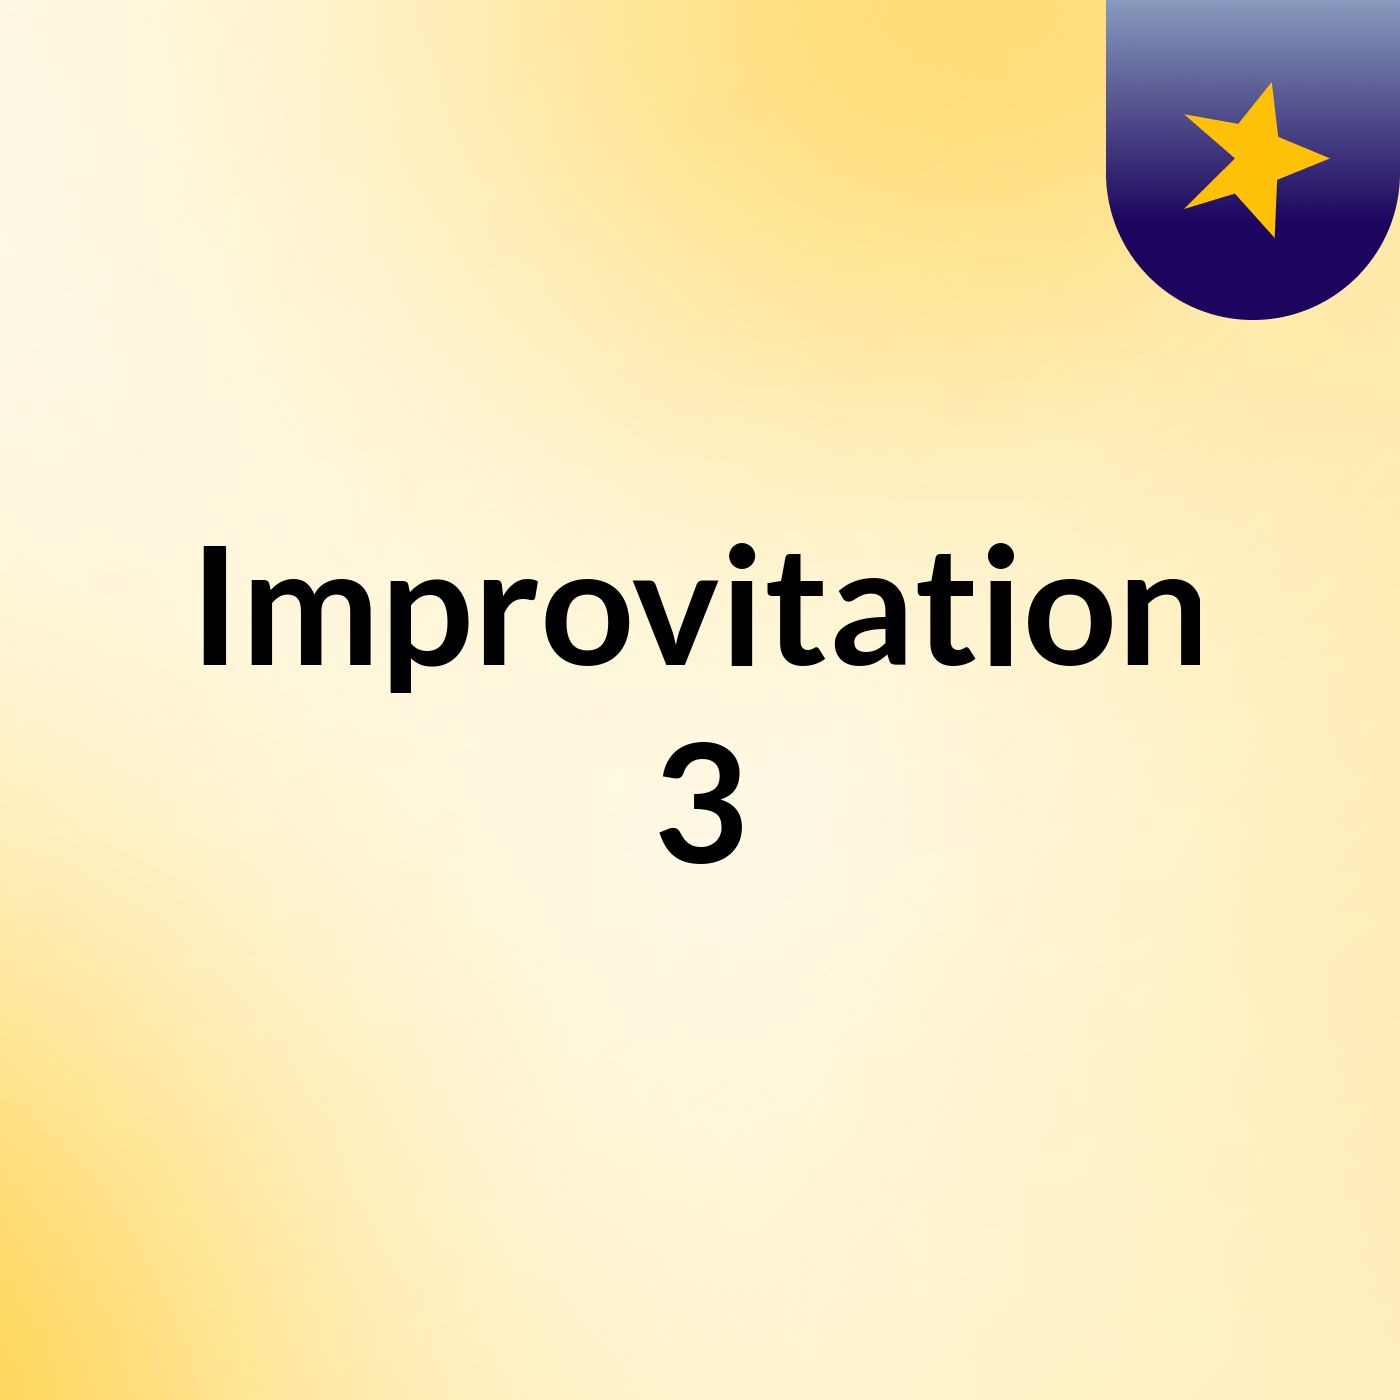 Improvitation 3